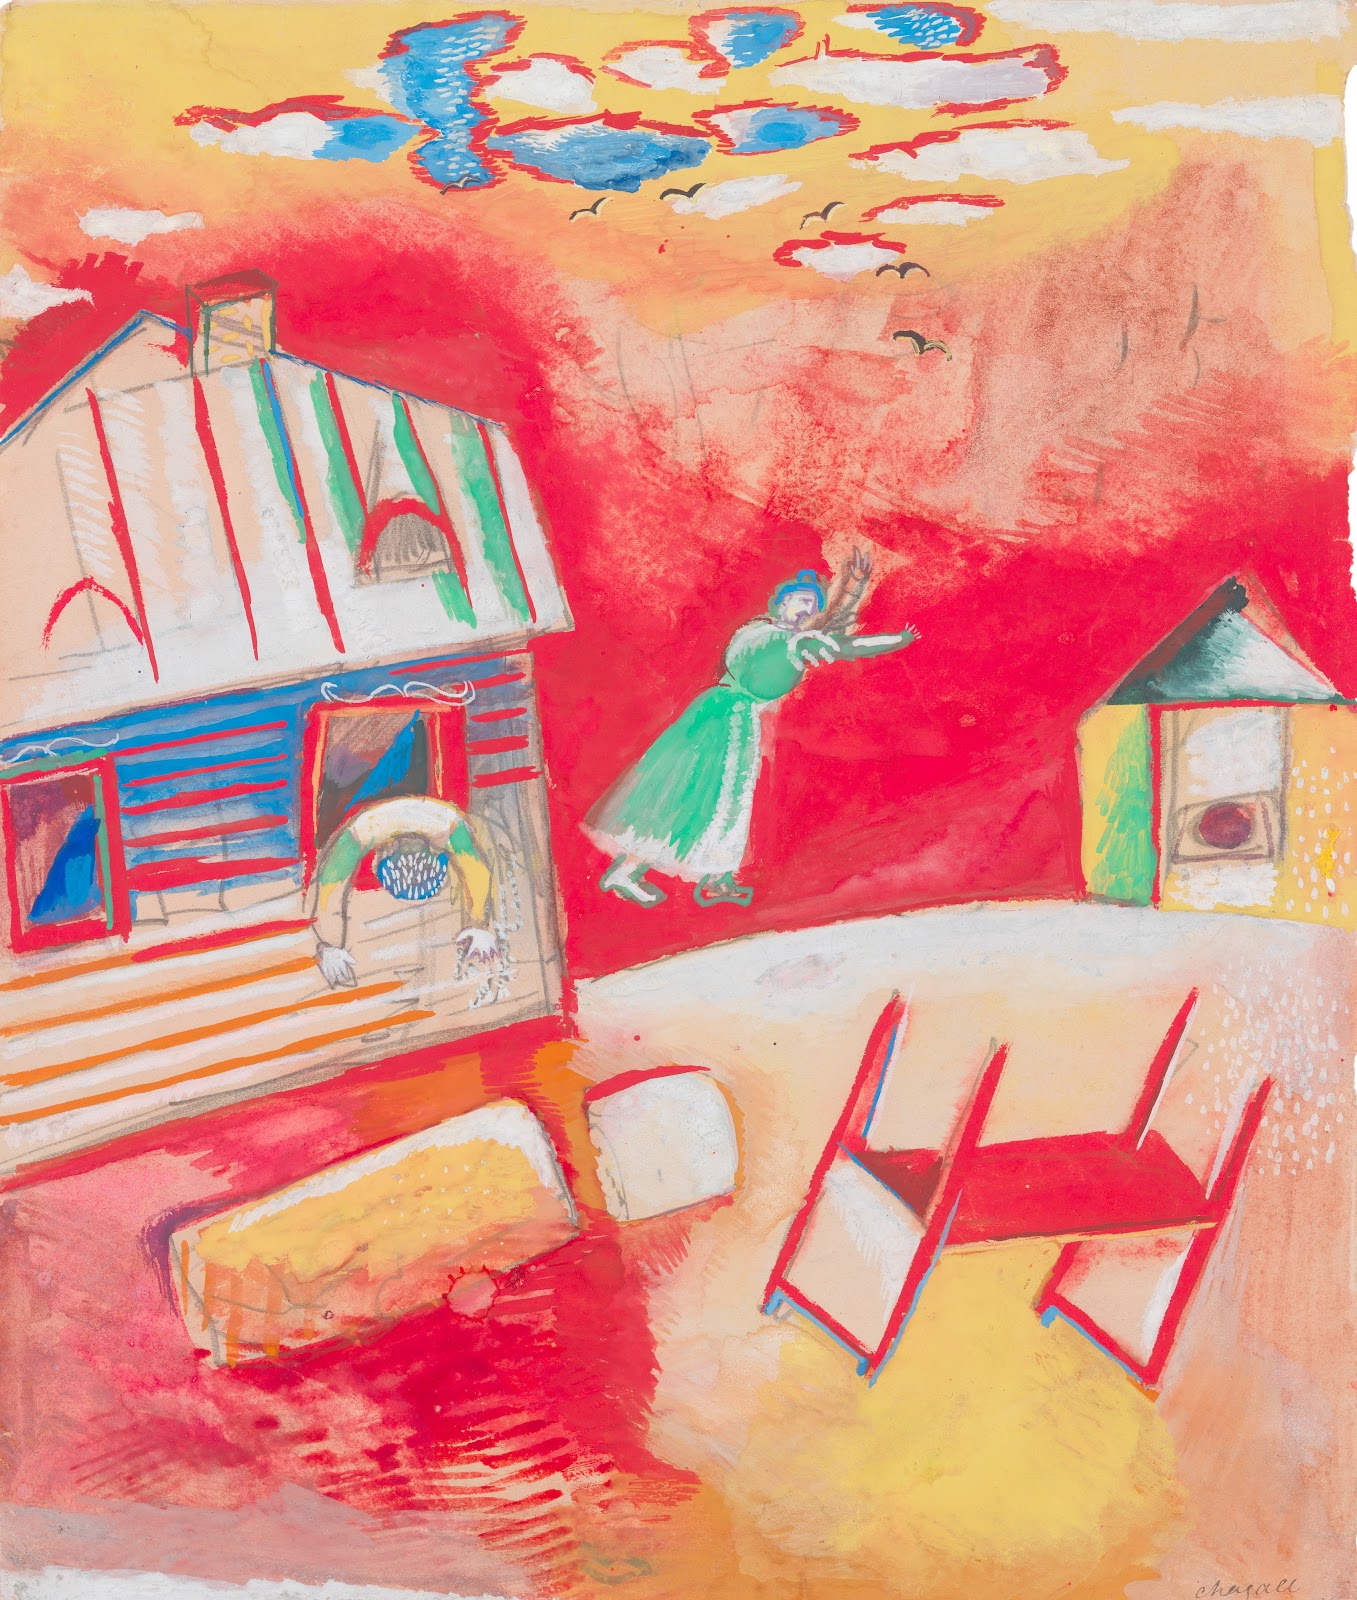 Marc+Chagall-1887-1985 (284).jpg